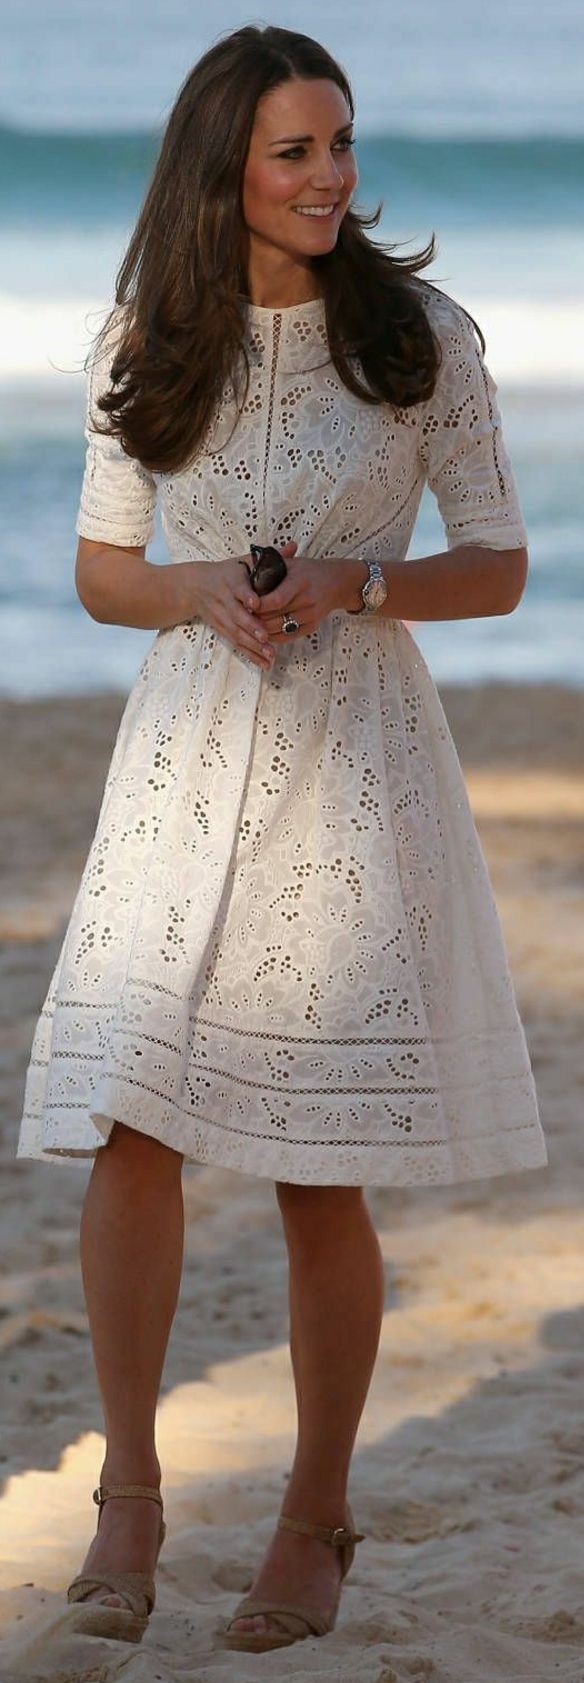 Kate Middleton White Chic Boho Dress